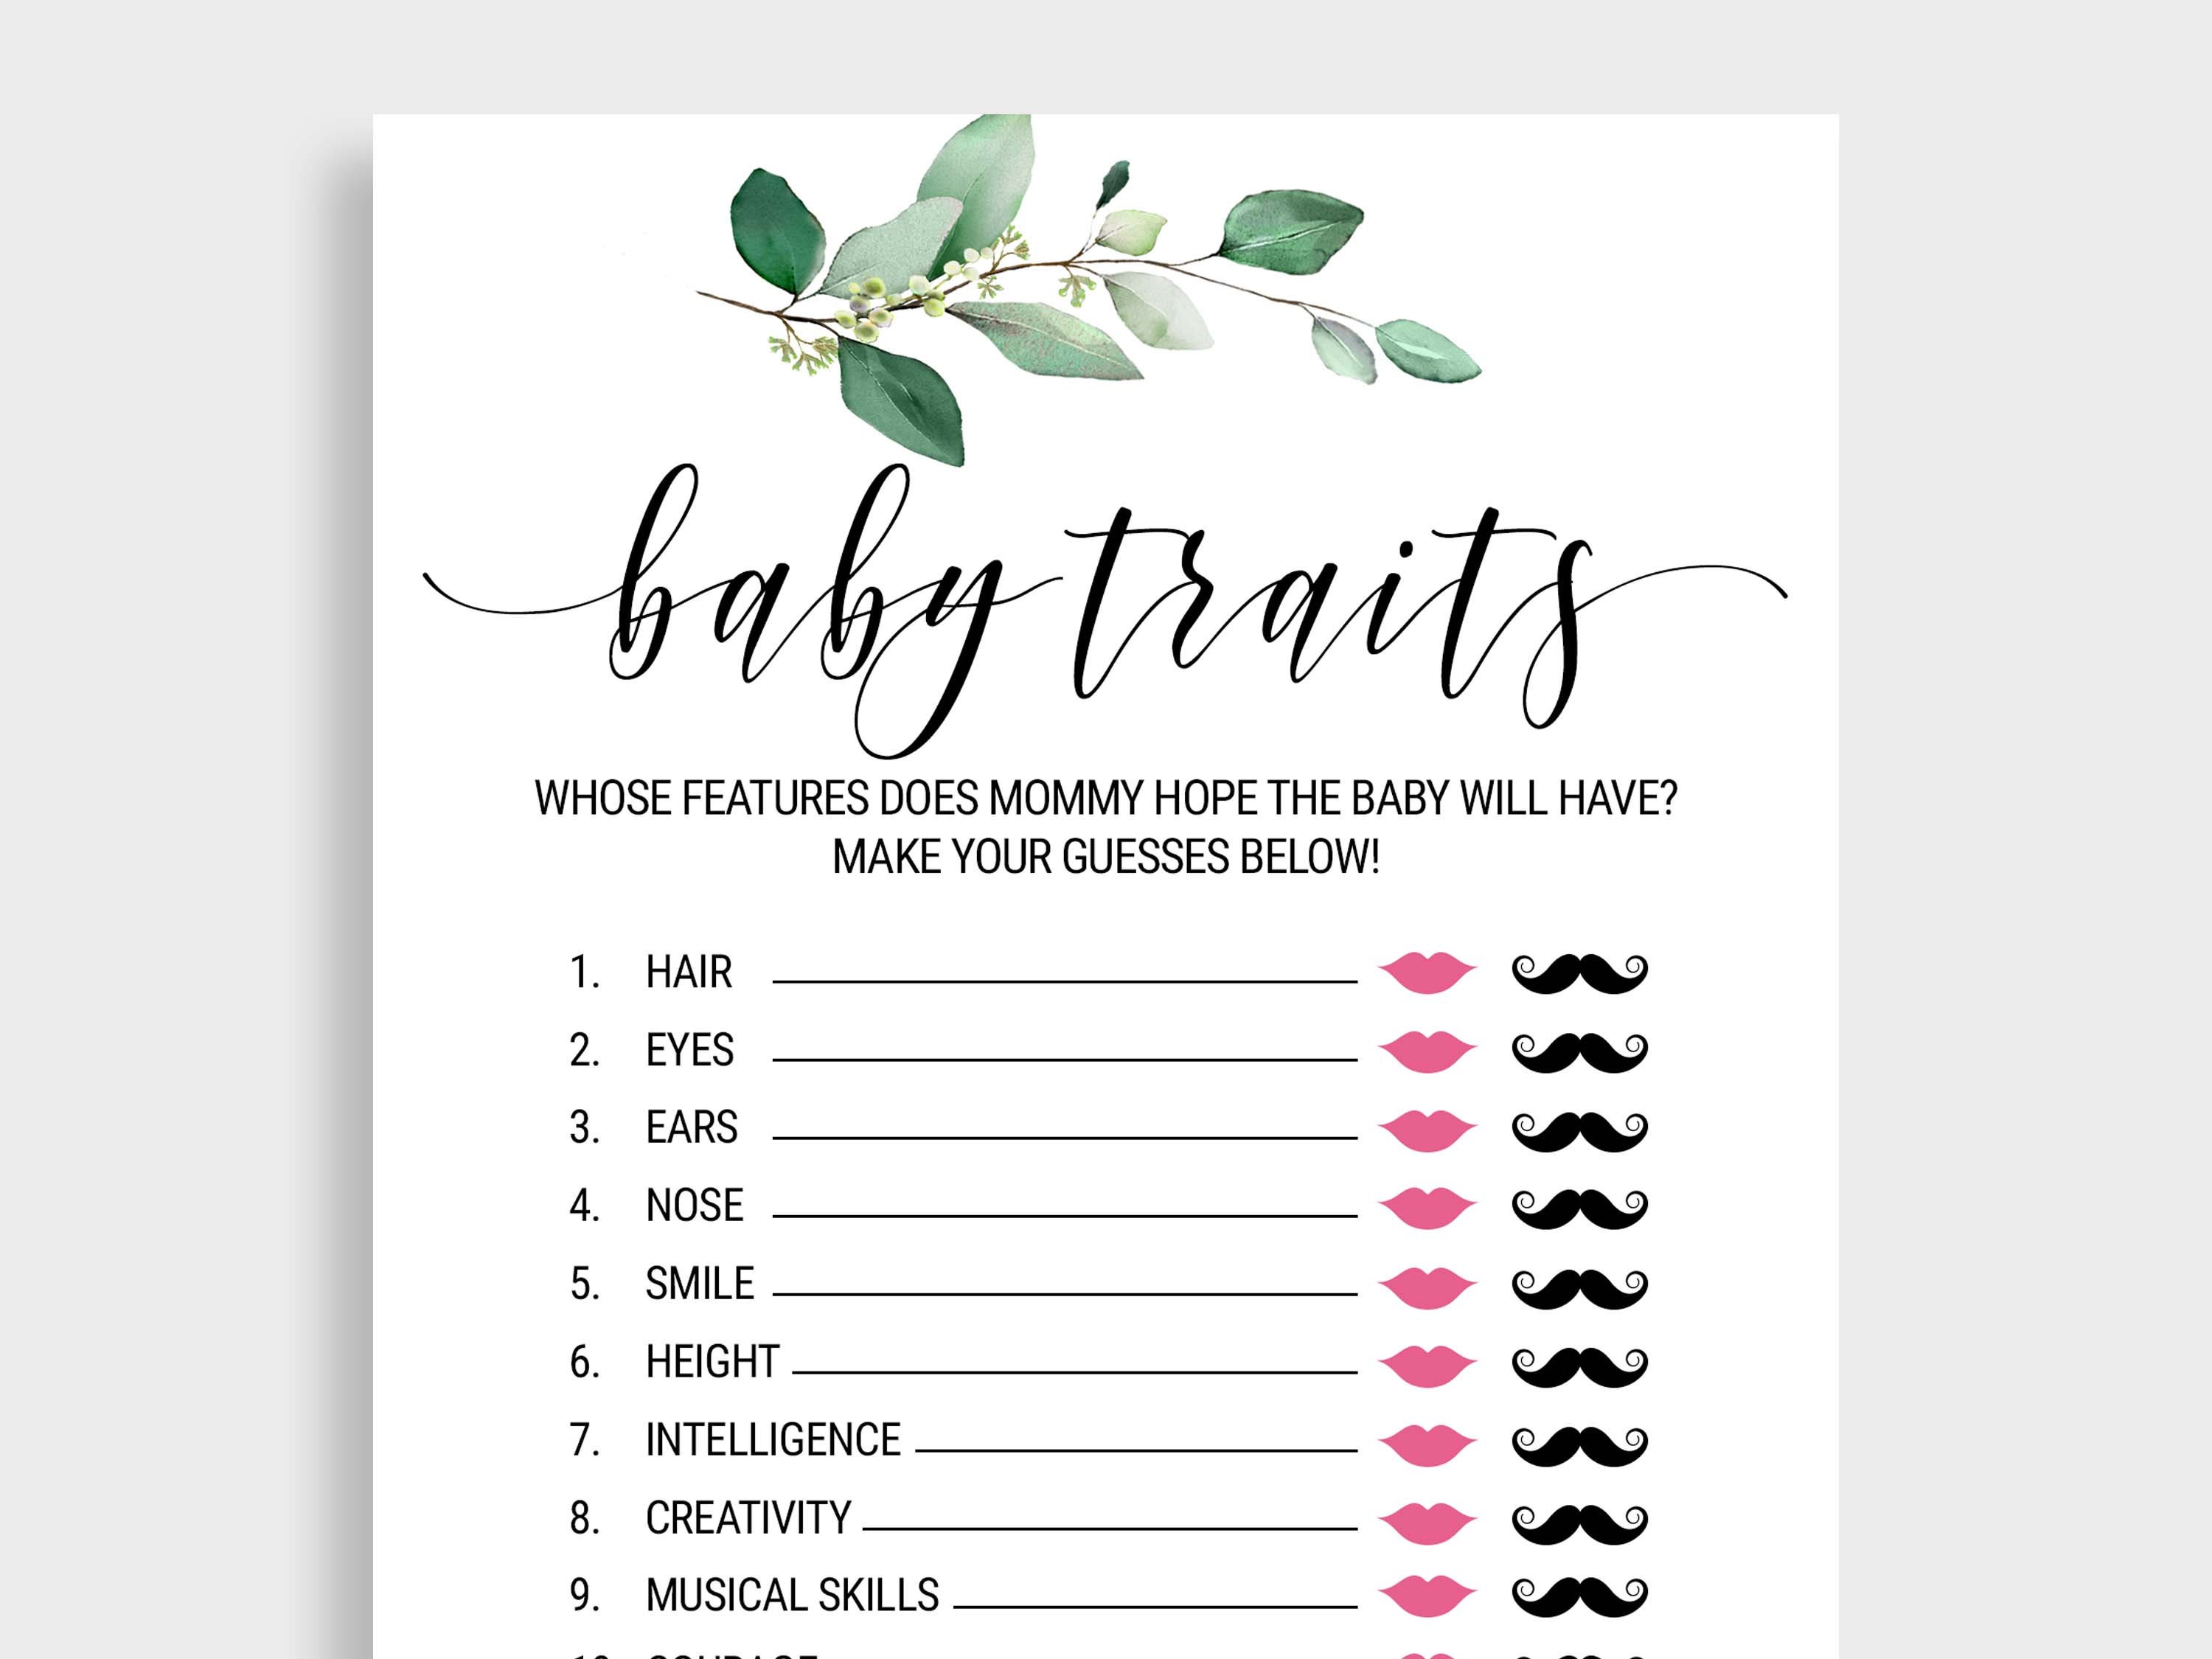 Baby Girl - Baby Traits